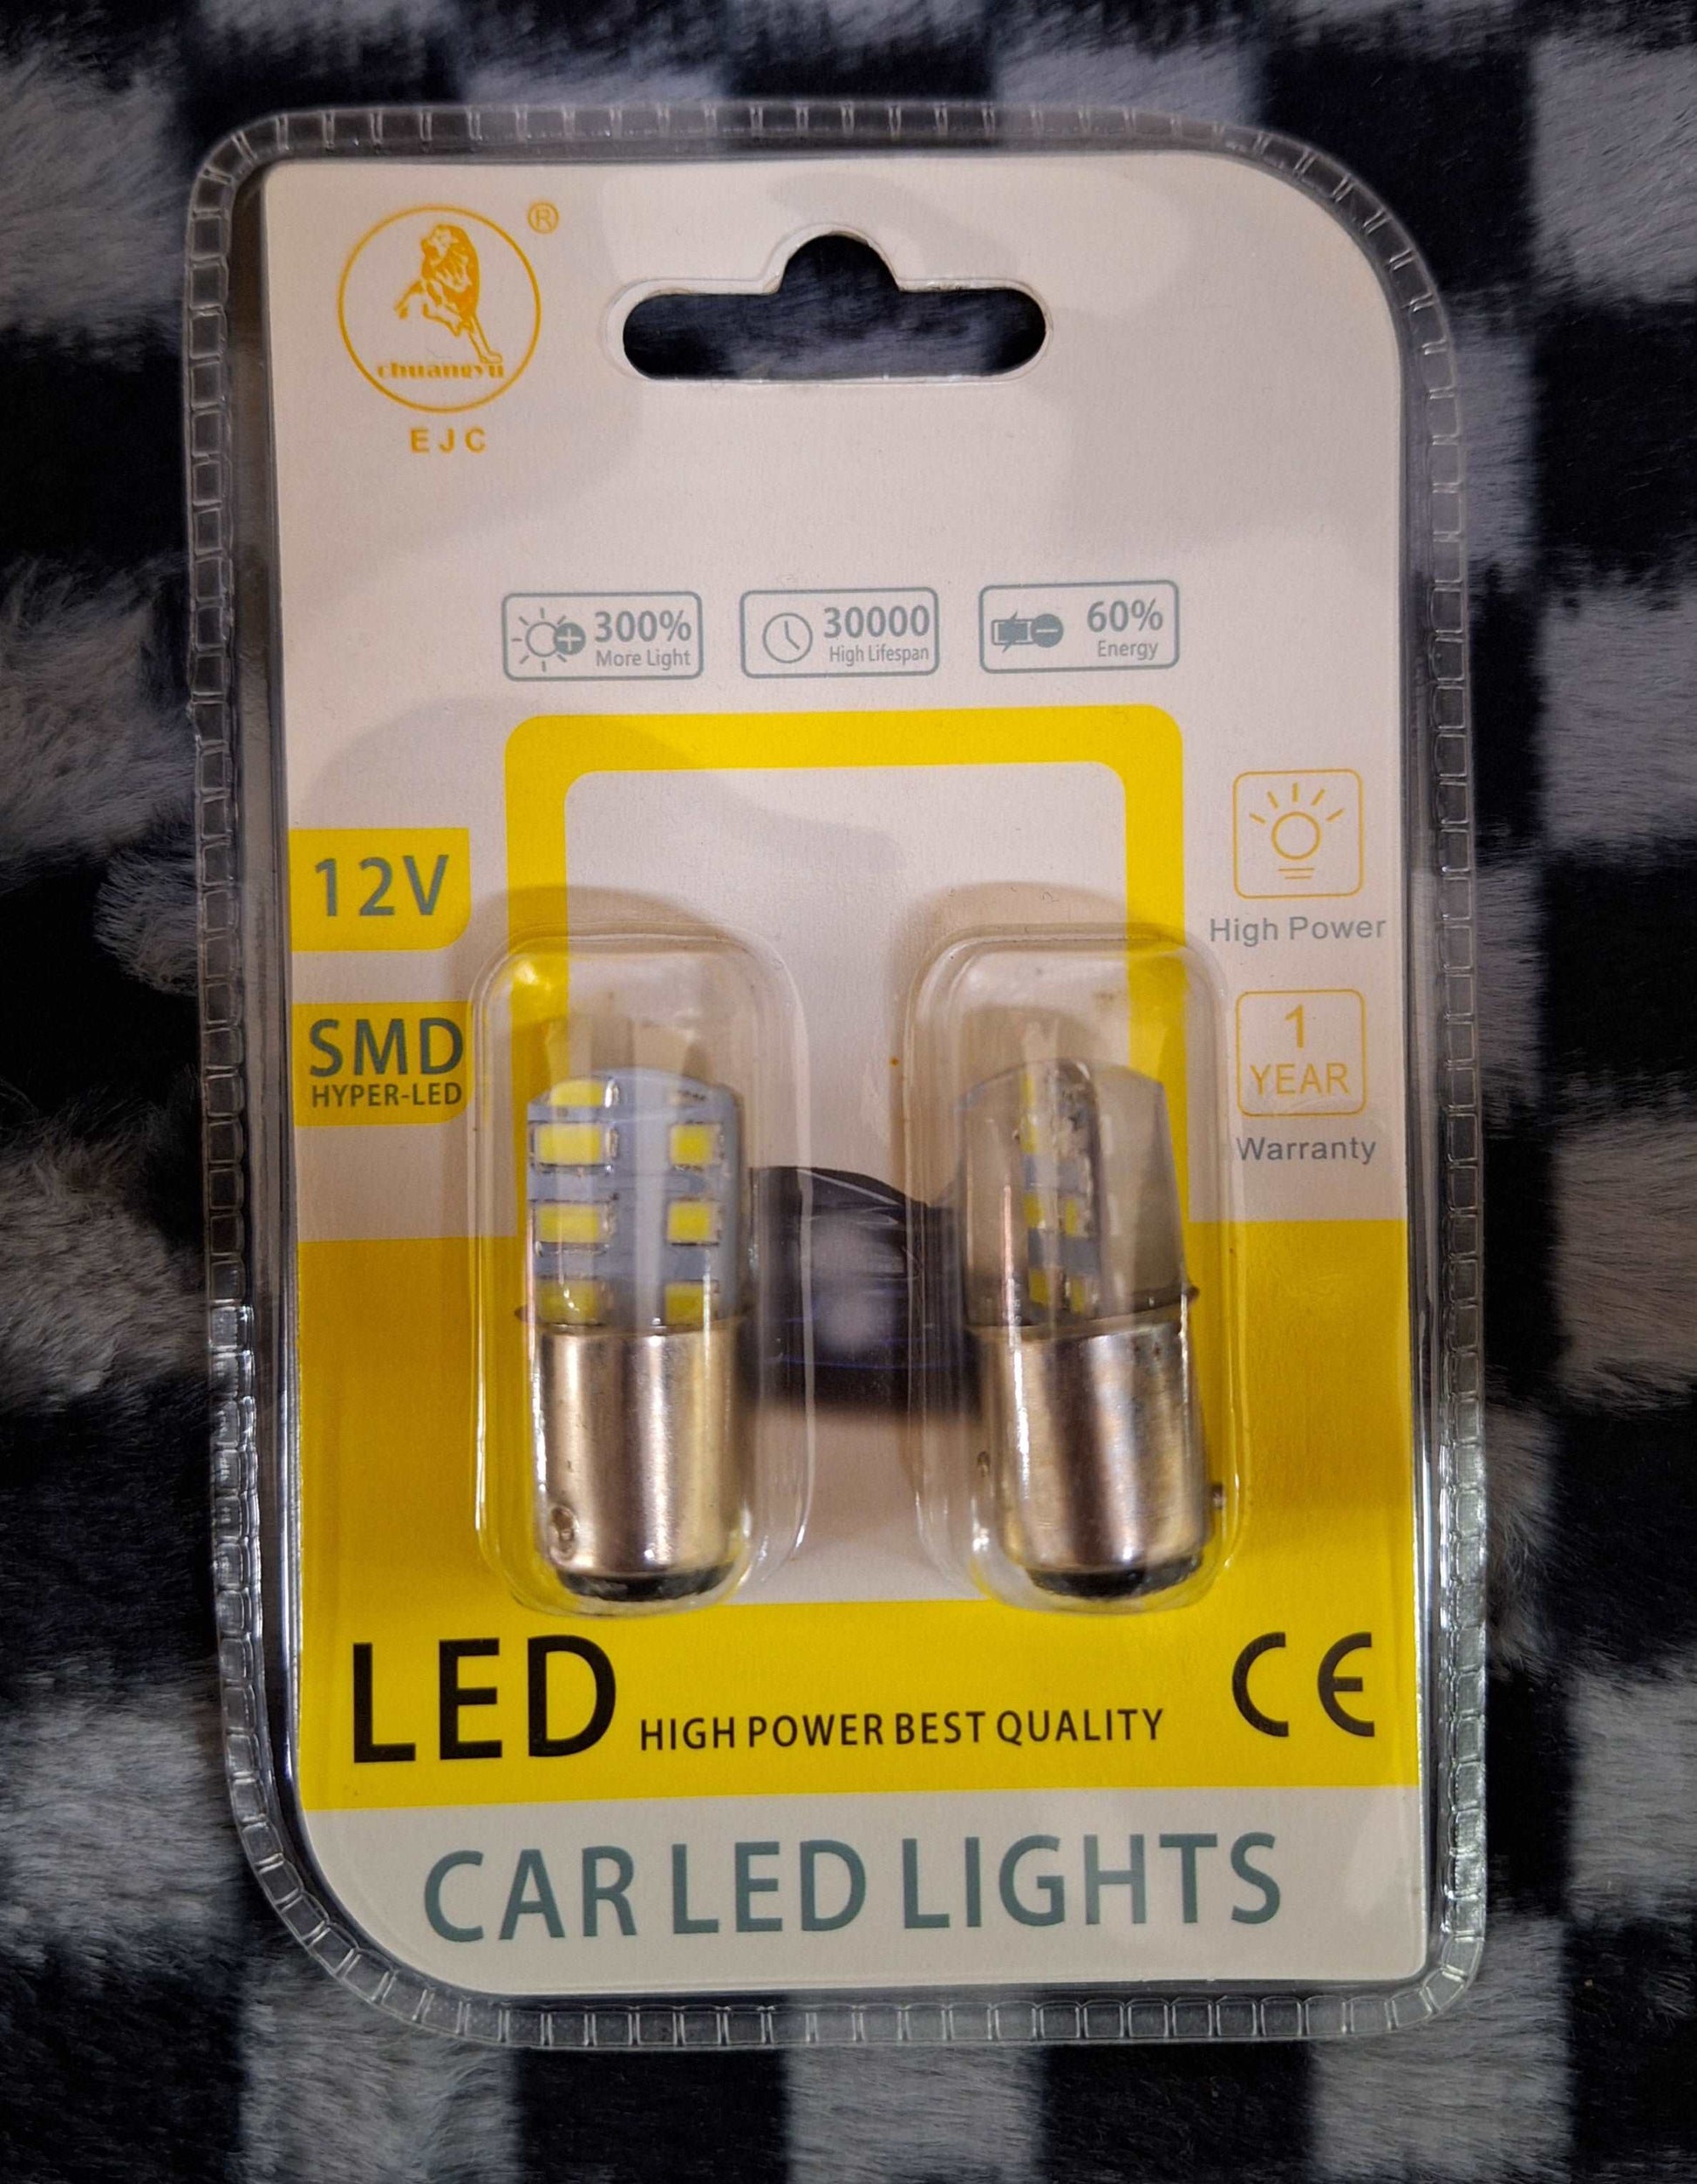 1157 SMD Hyper-LED 12V High Power LED Bulbs - 2pc Double Contact